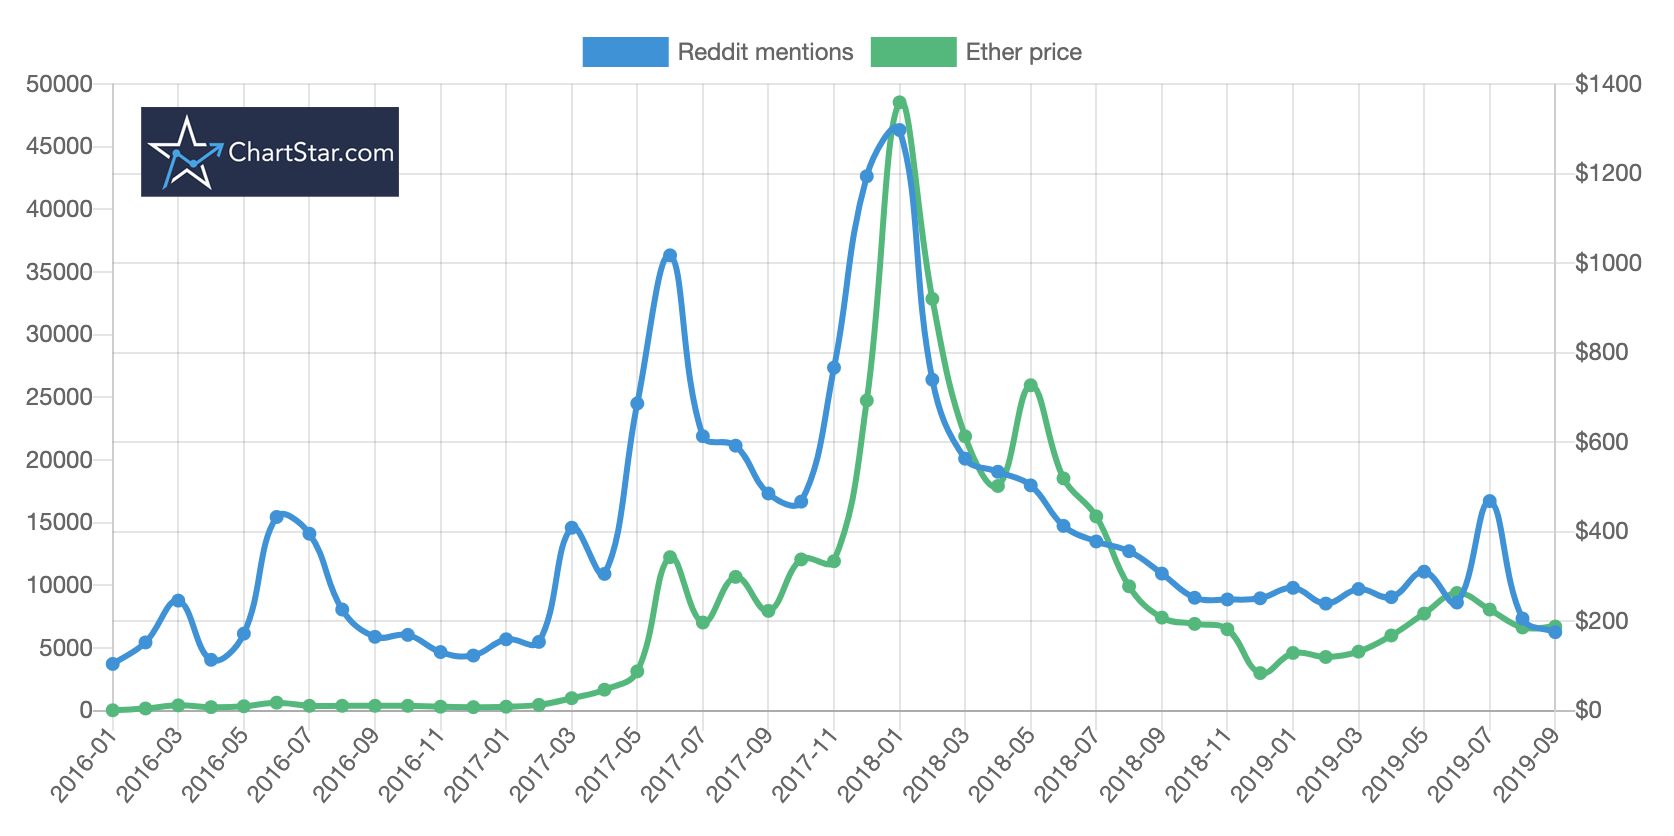 ether price vs reddit mentions